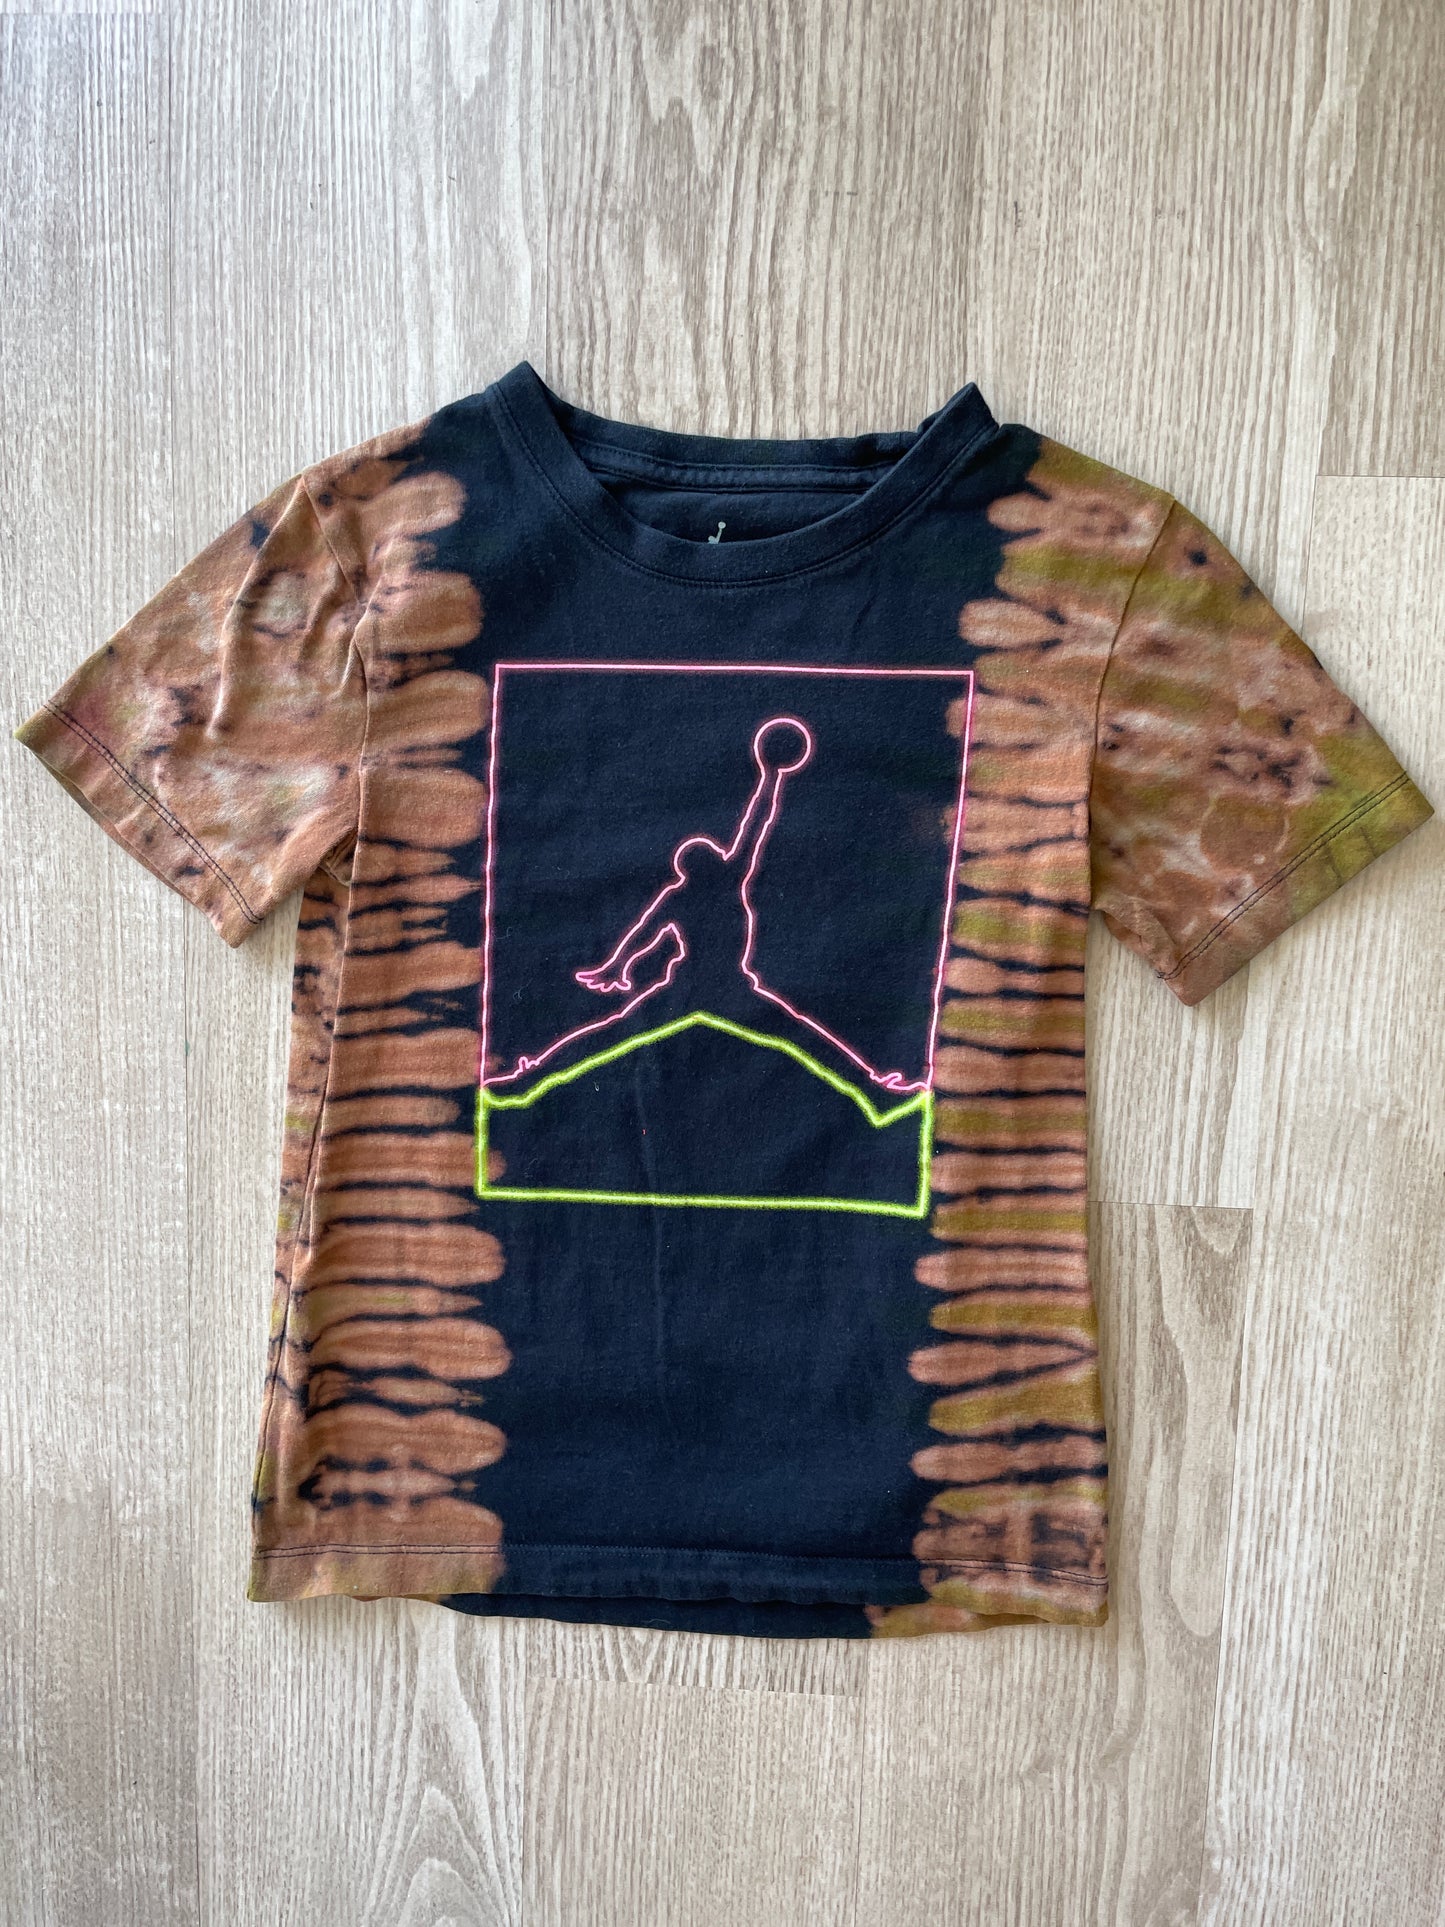 YOUTH SMALL Air Jordan Handmade Reverse Tie Dye T-Shirt | One-Of-a-Kind Black and Bleach Short Sleeve